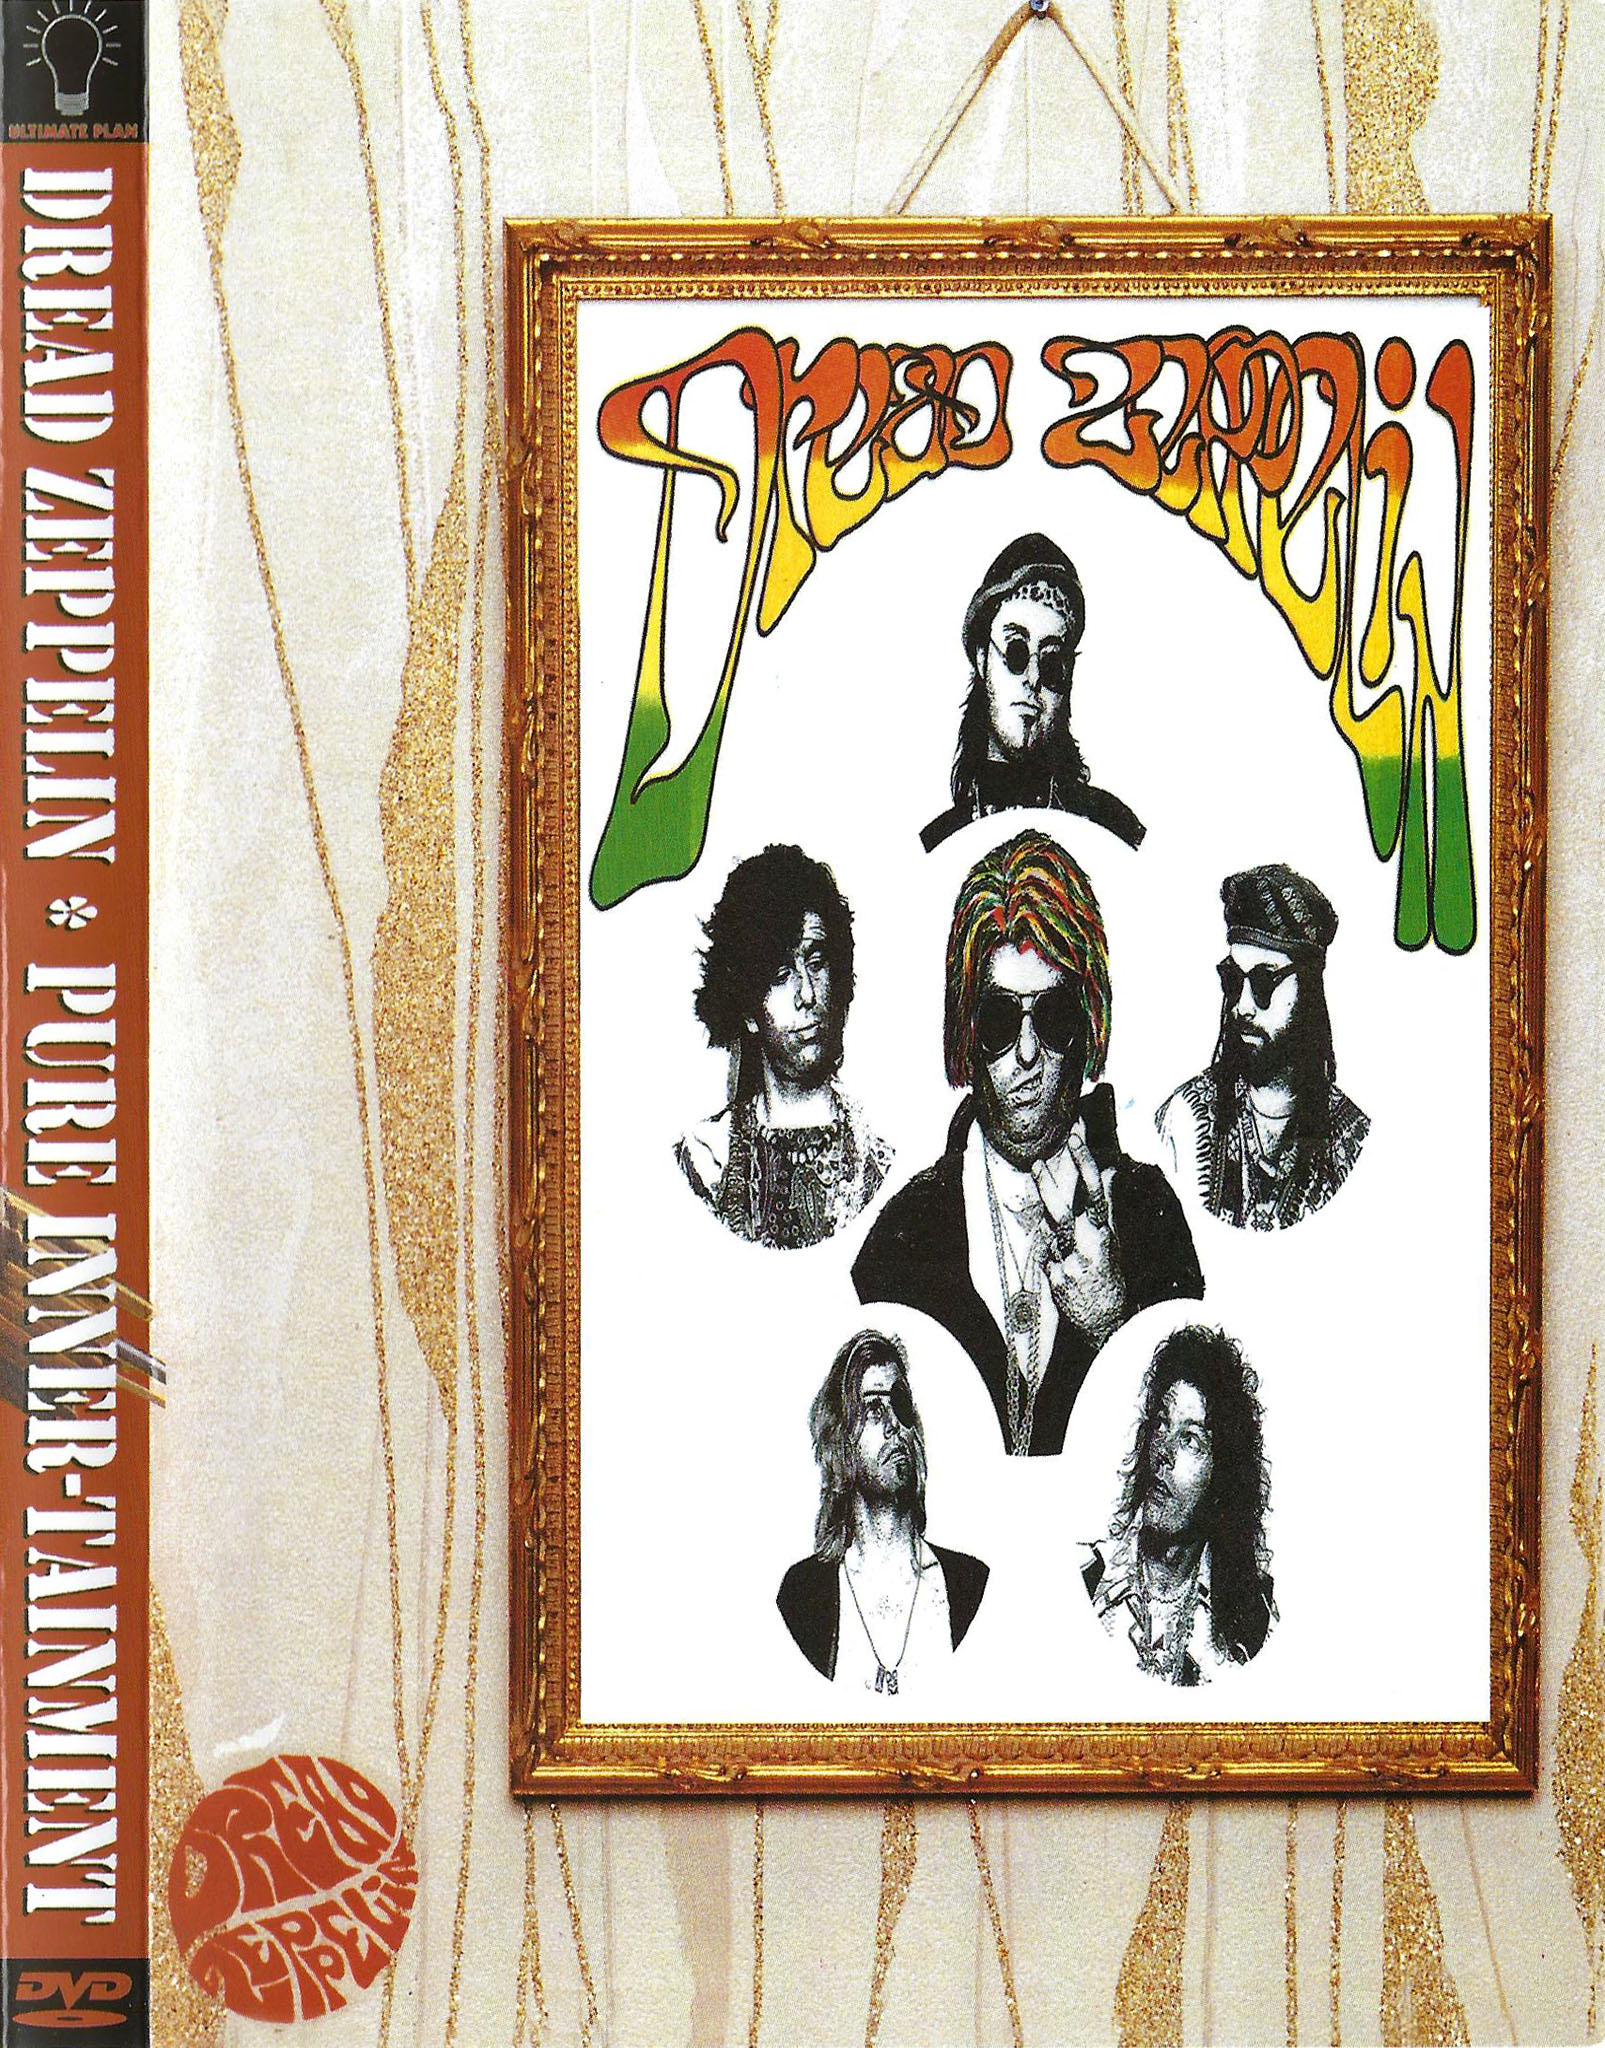 Dread Zeppelin Pure Inner-Tainment DVD cover